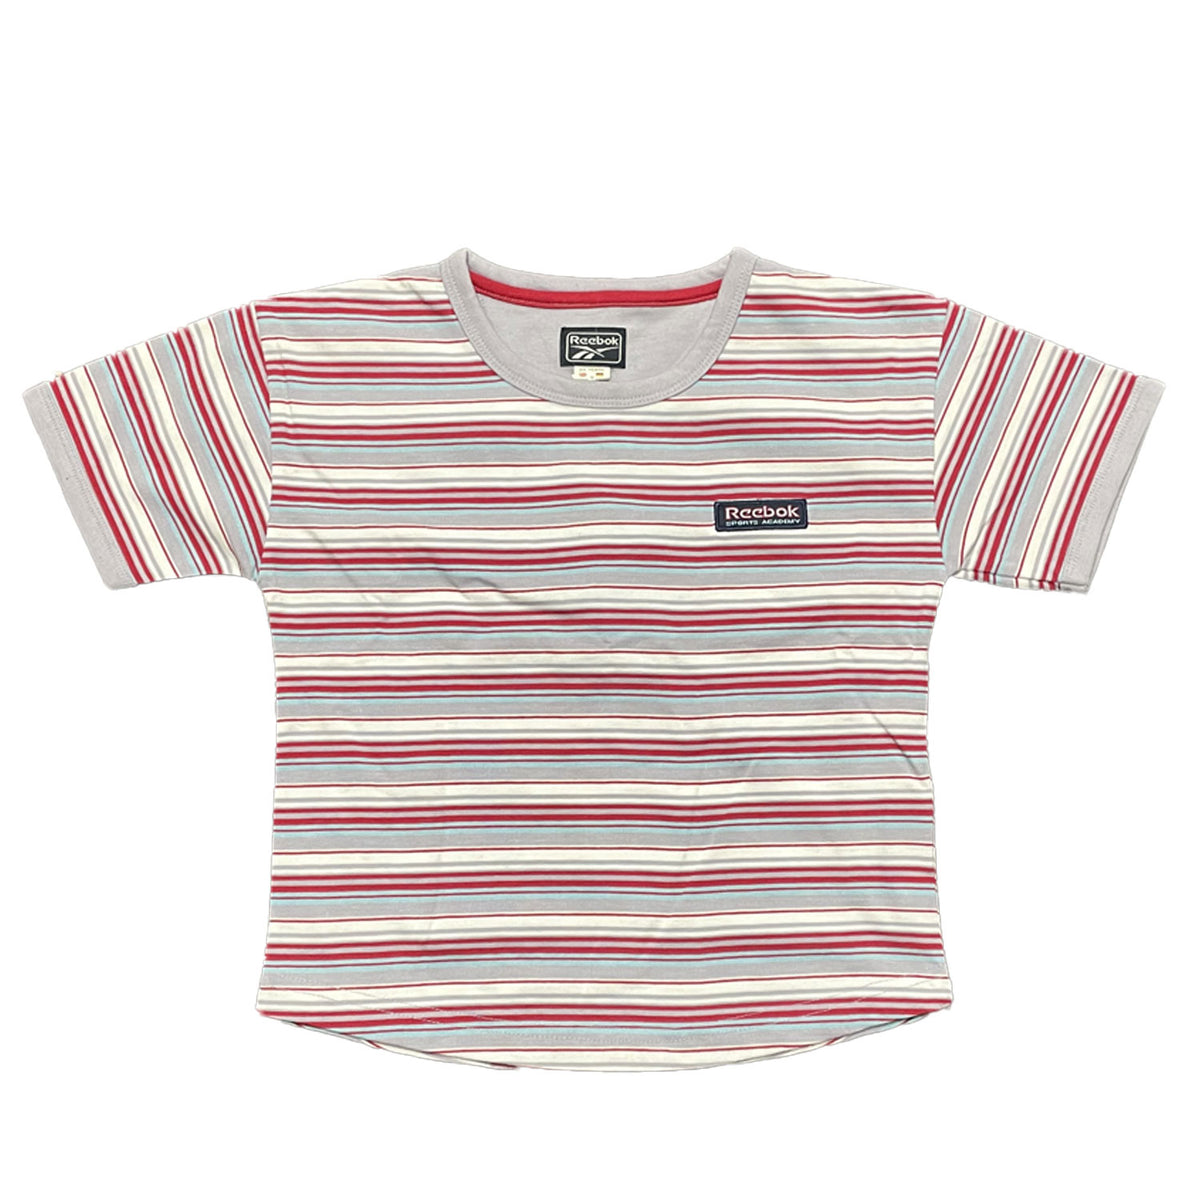 Reebok Infant Girls T-Shirt